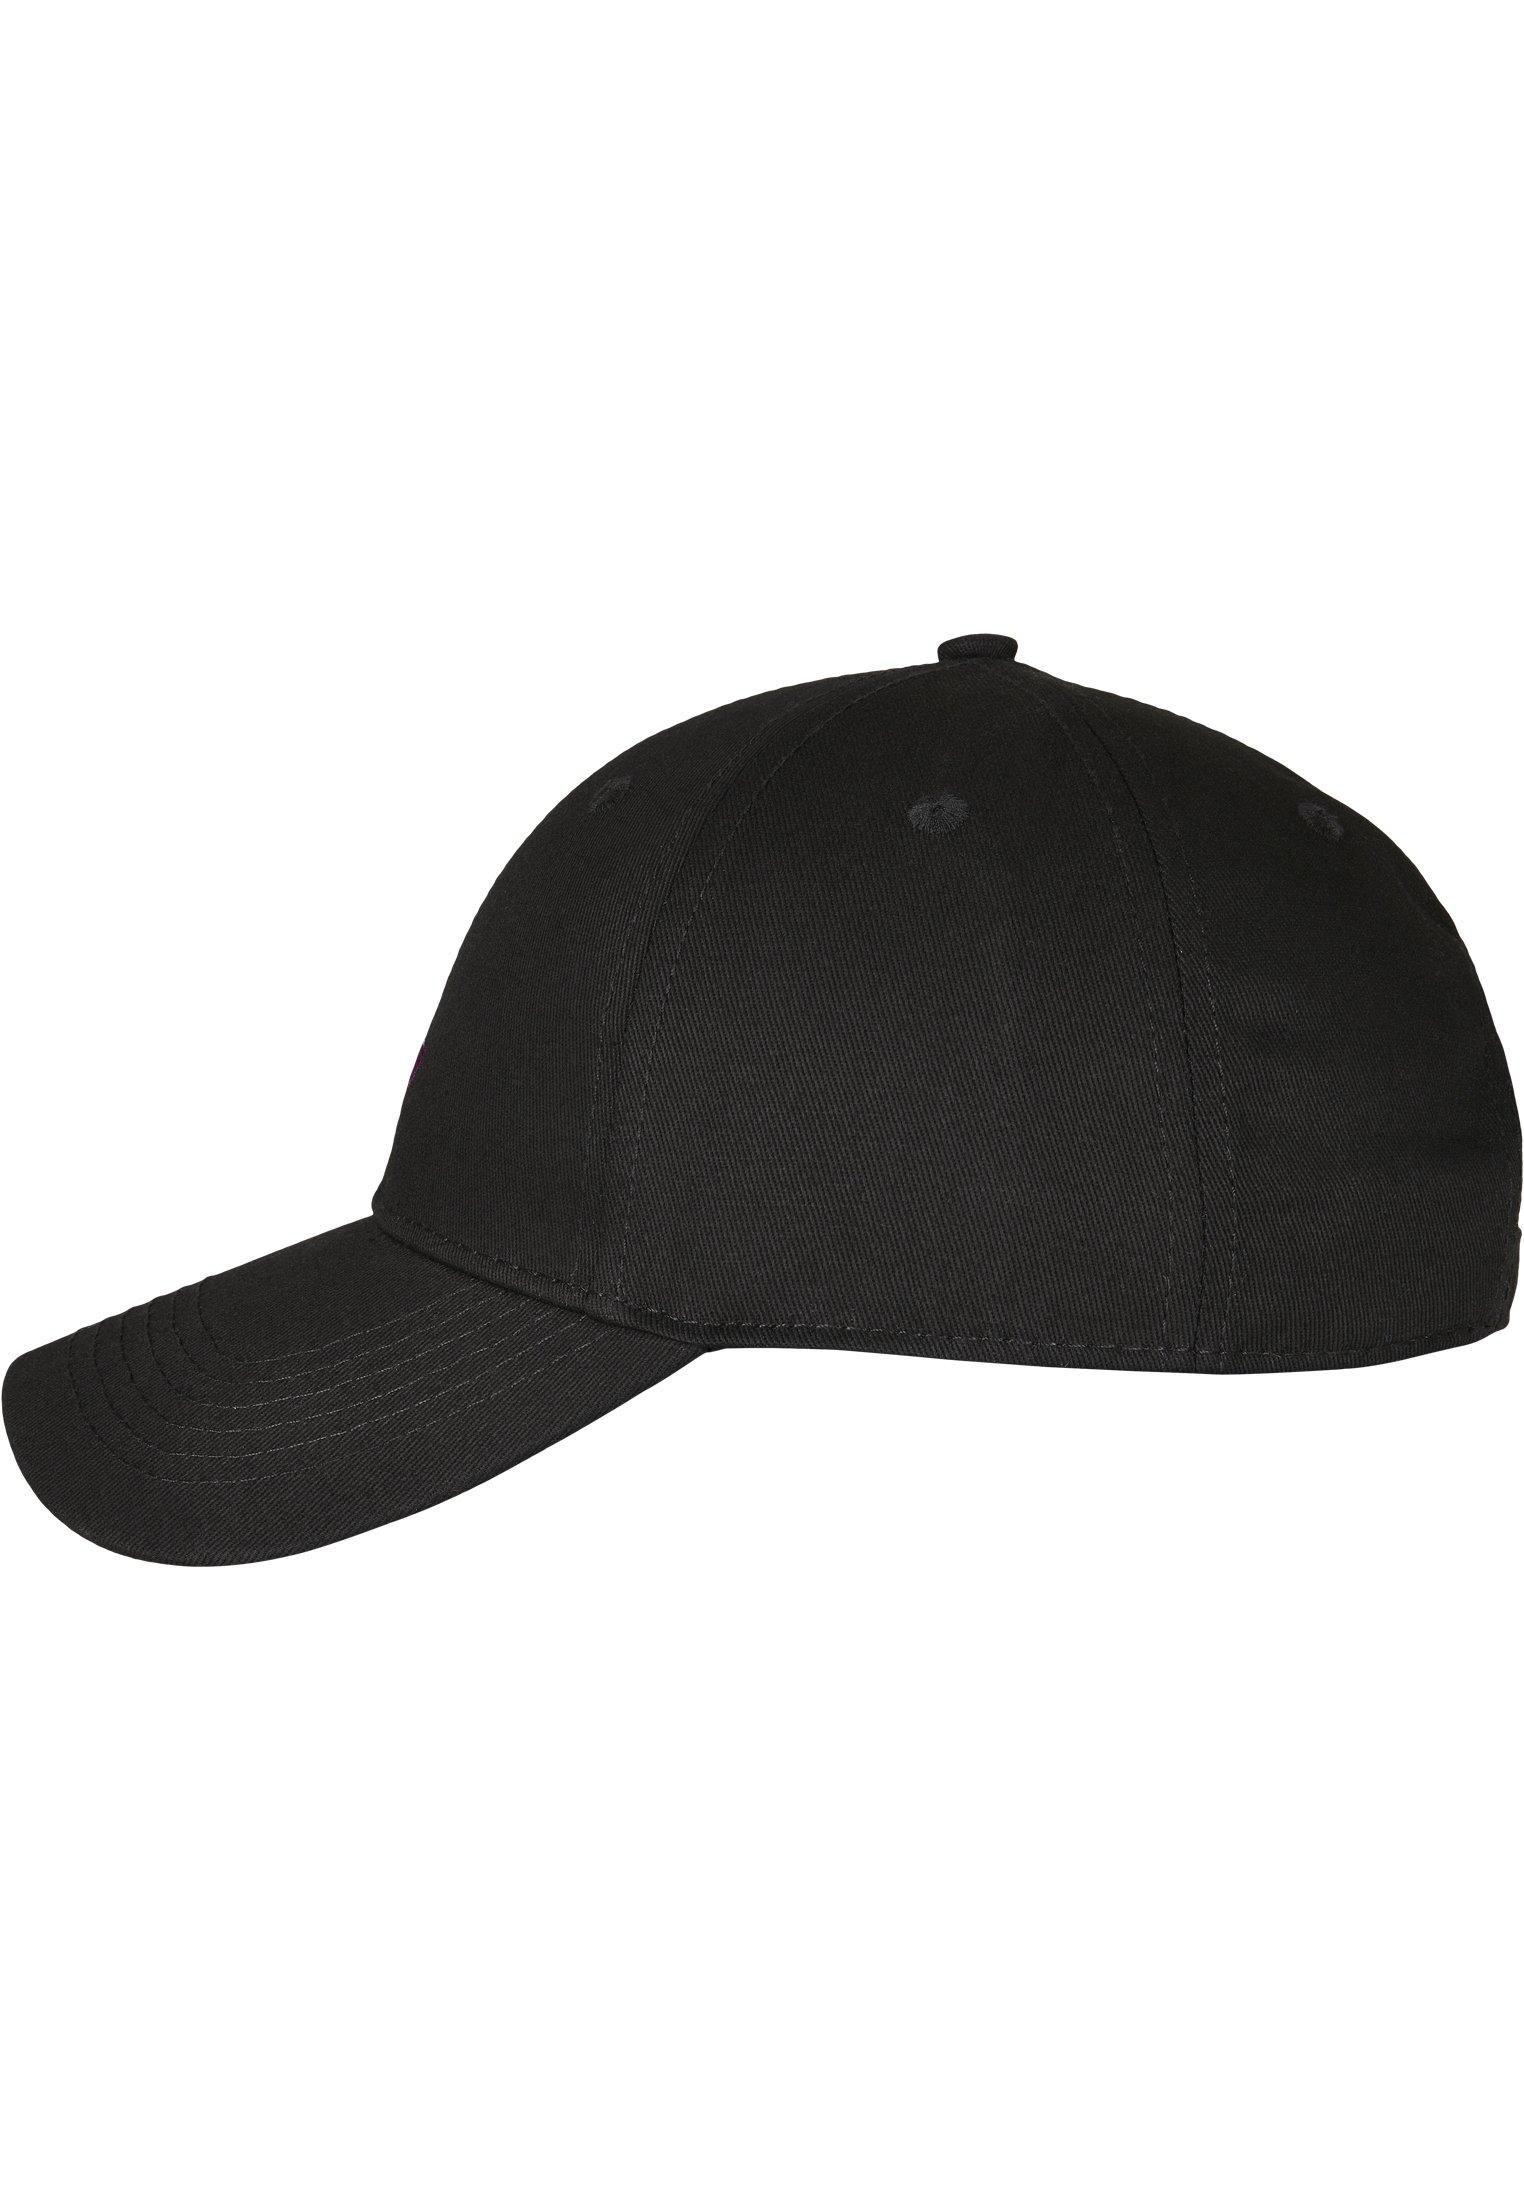 MIA PAPI Curved Cap black/mc one size